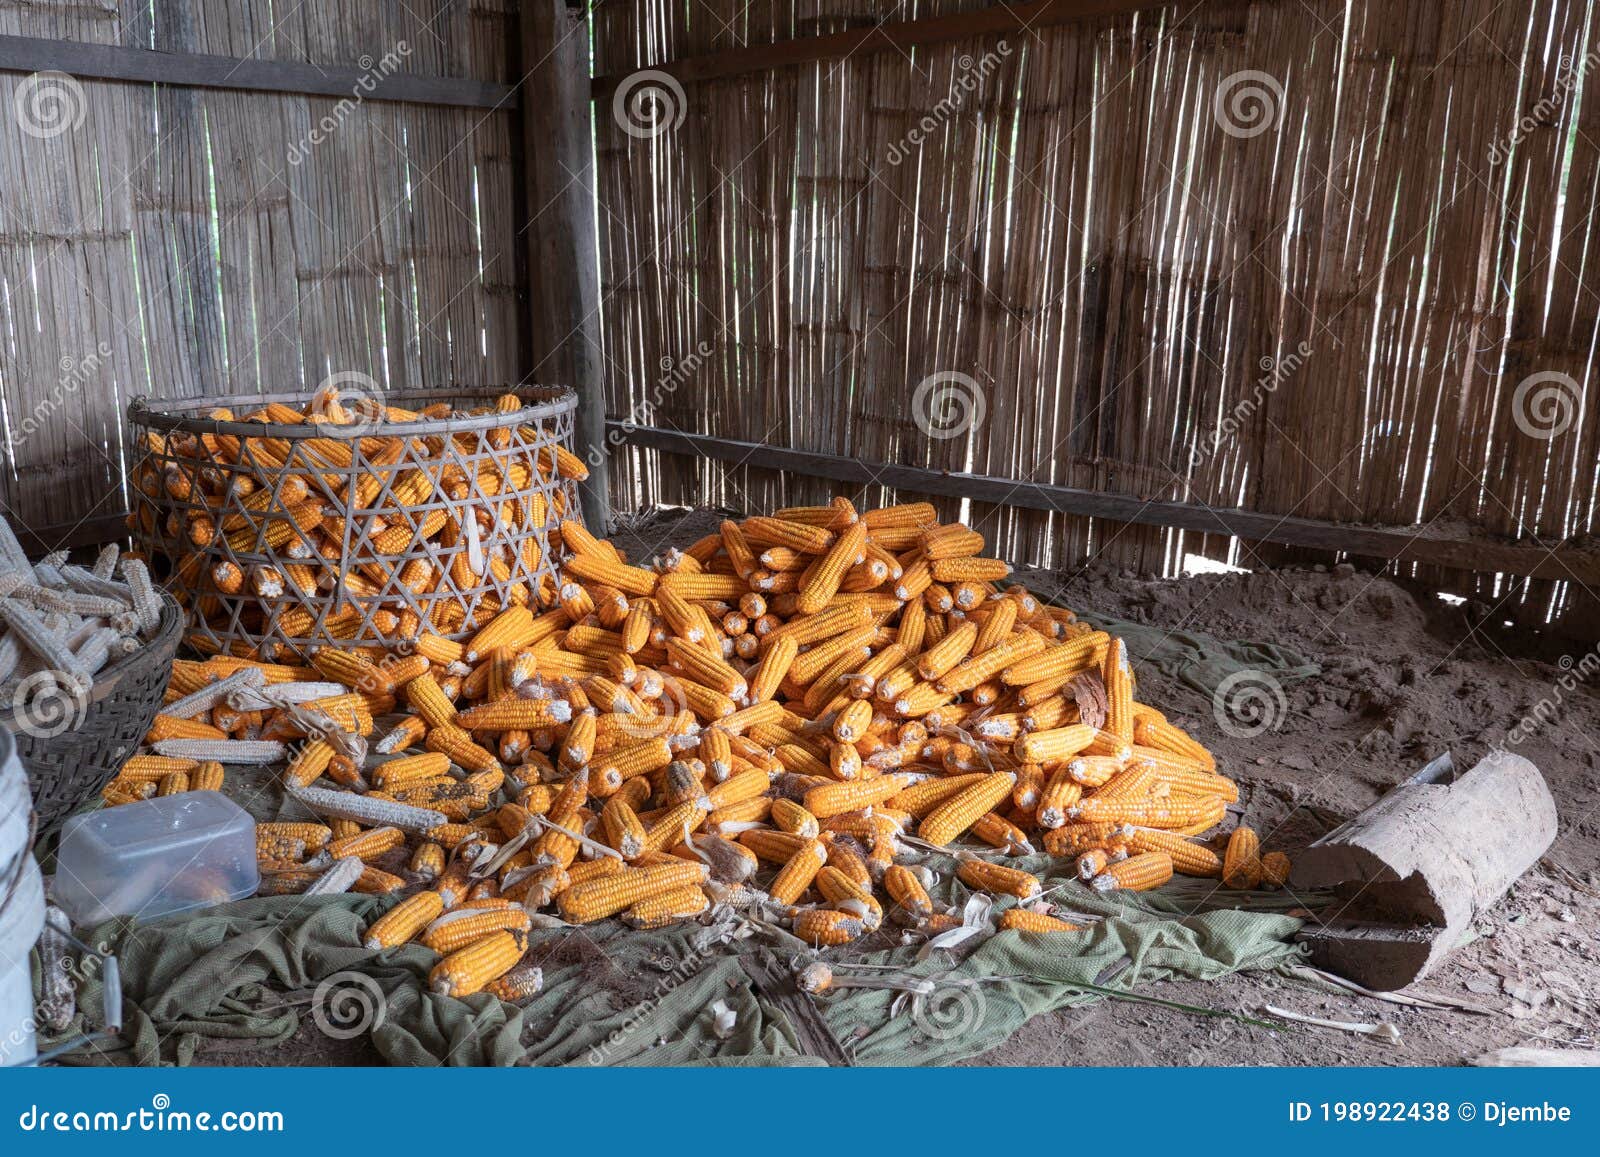 cambodia, crop of corn cobs